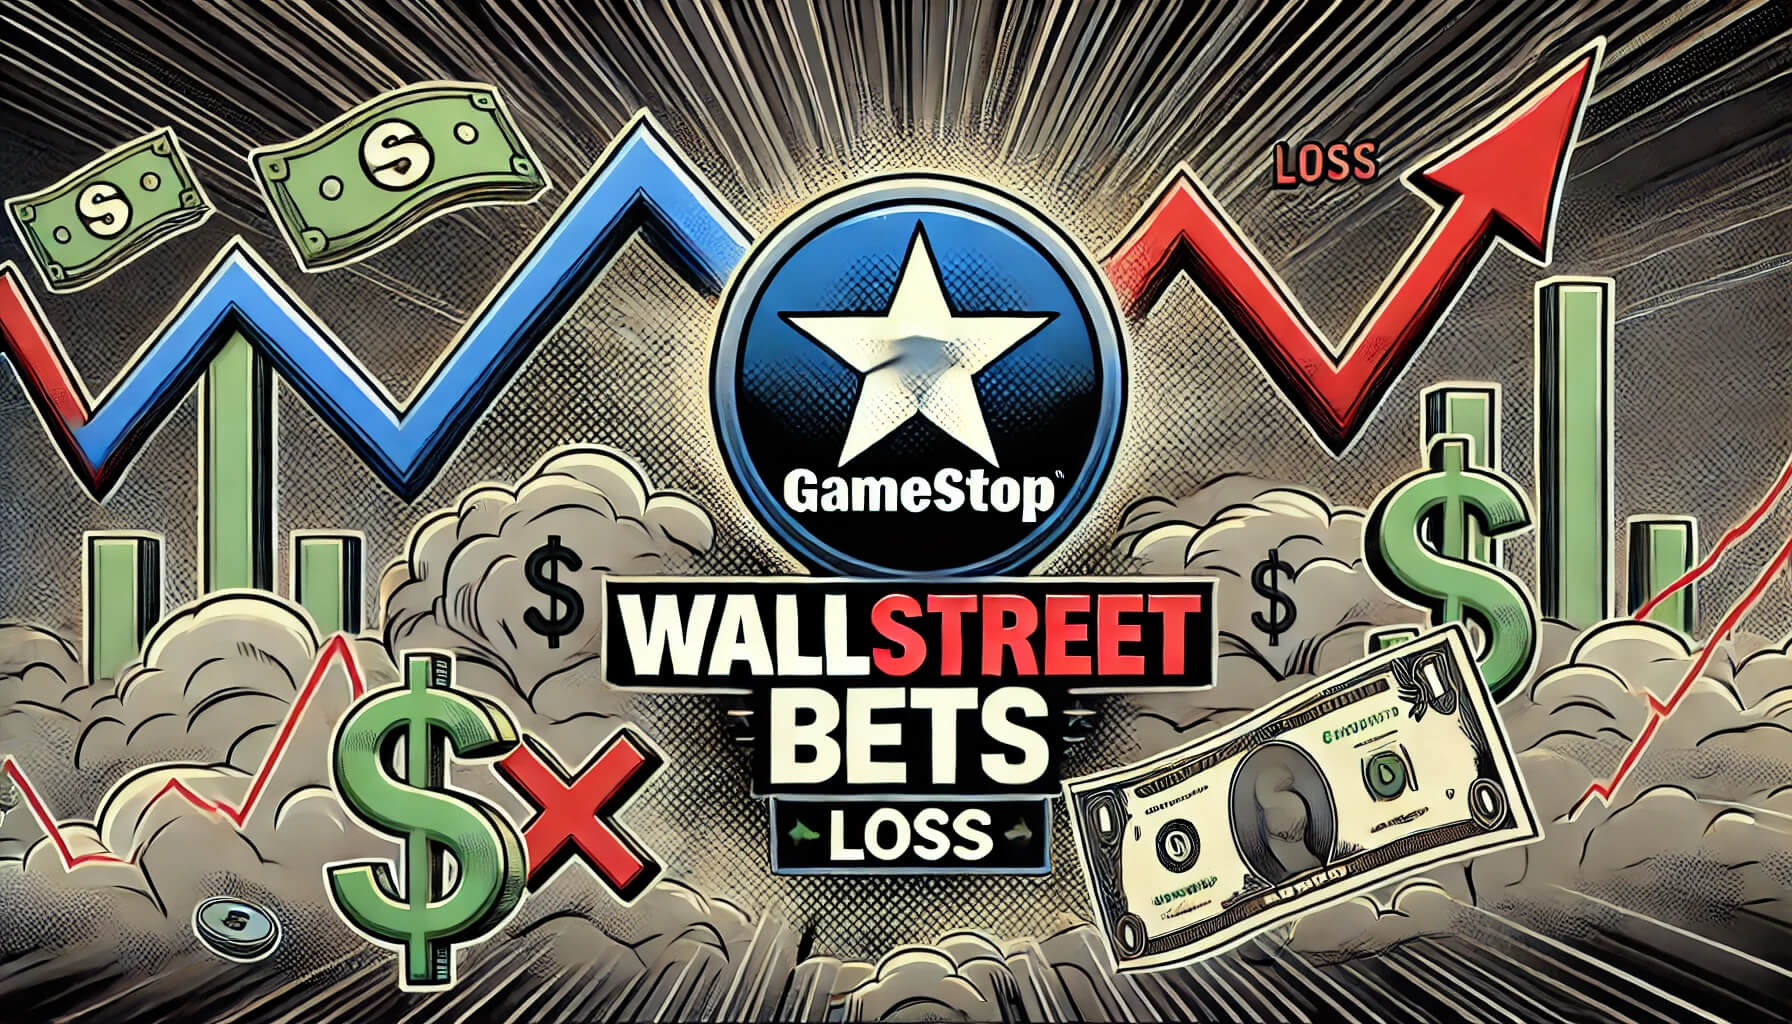 GameStop NYSE:GME Meme Stock Phenomenon and Strategic Moves